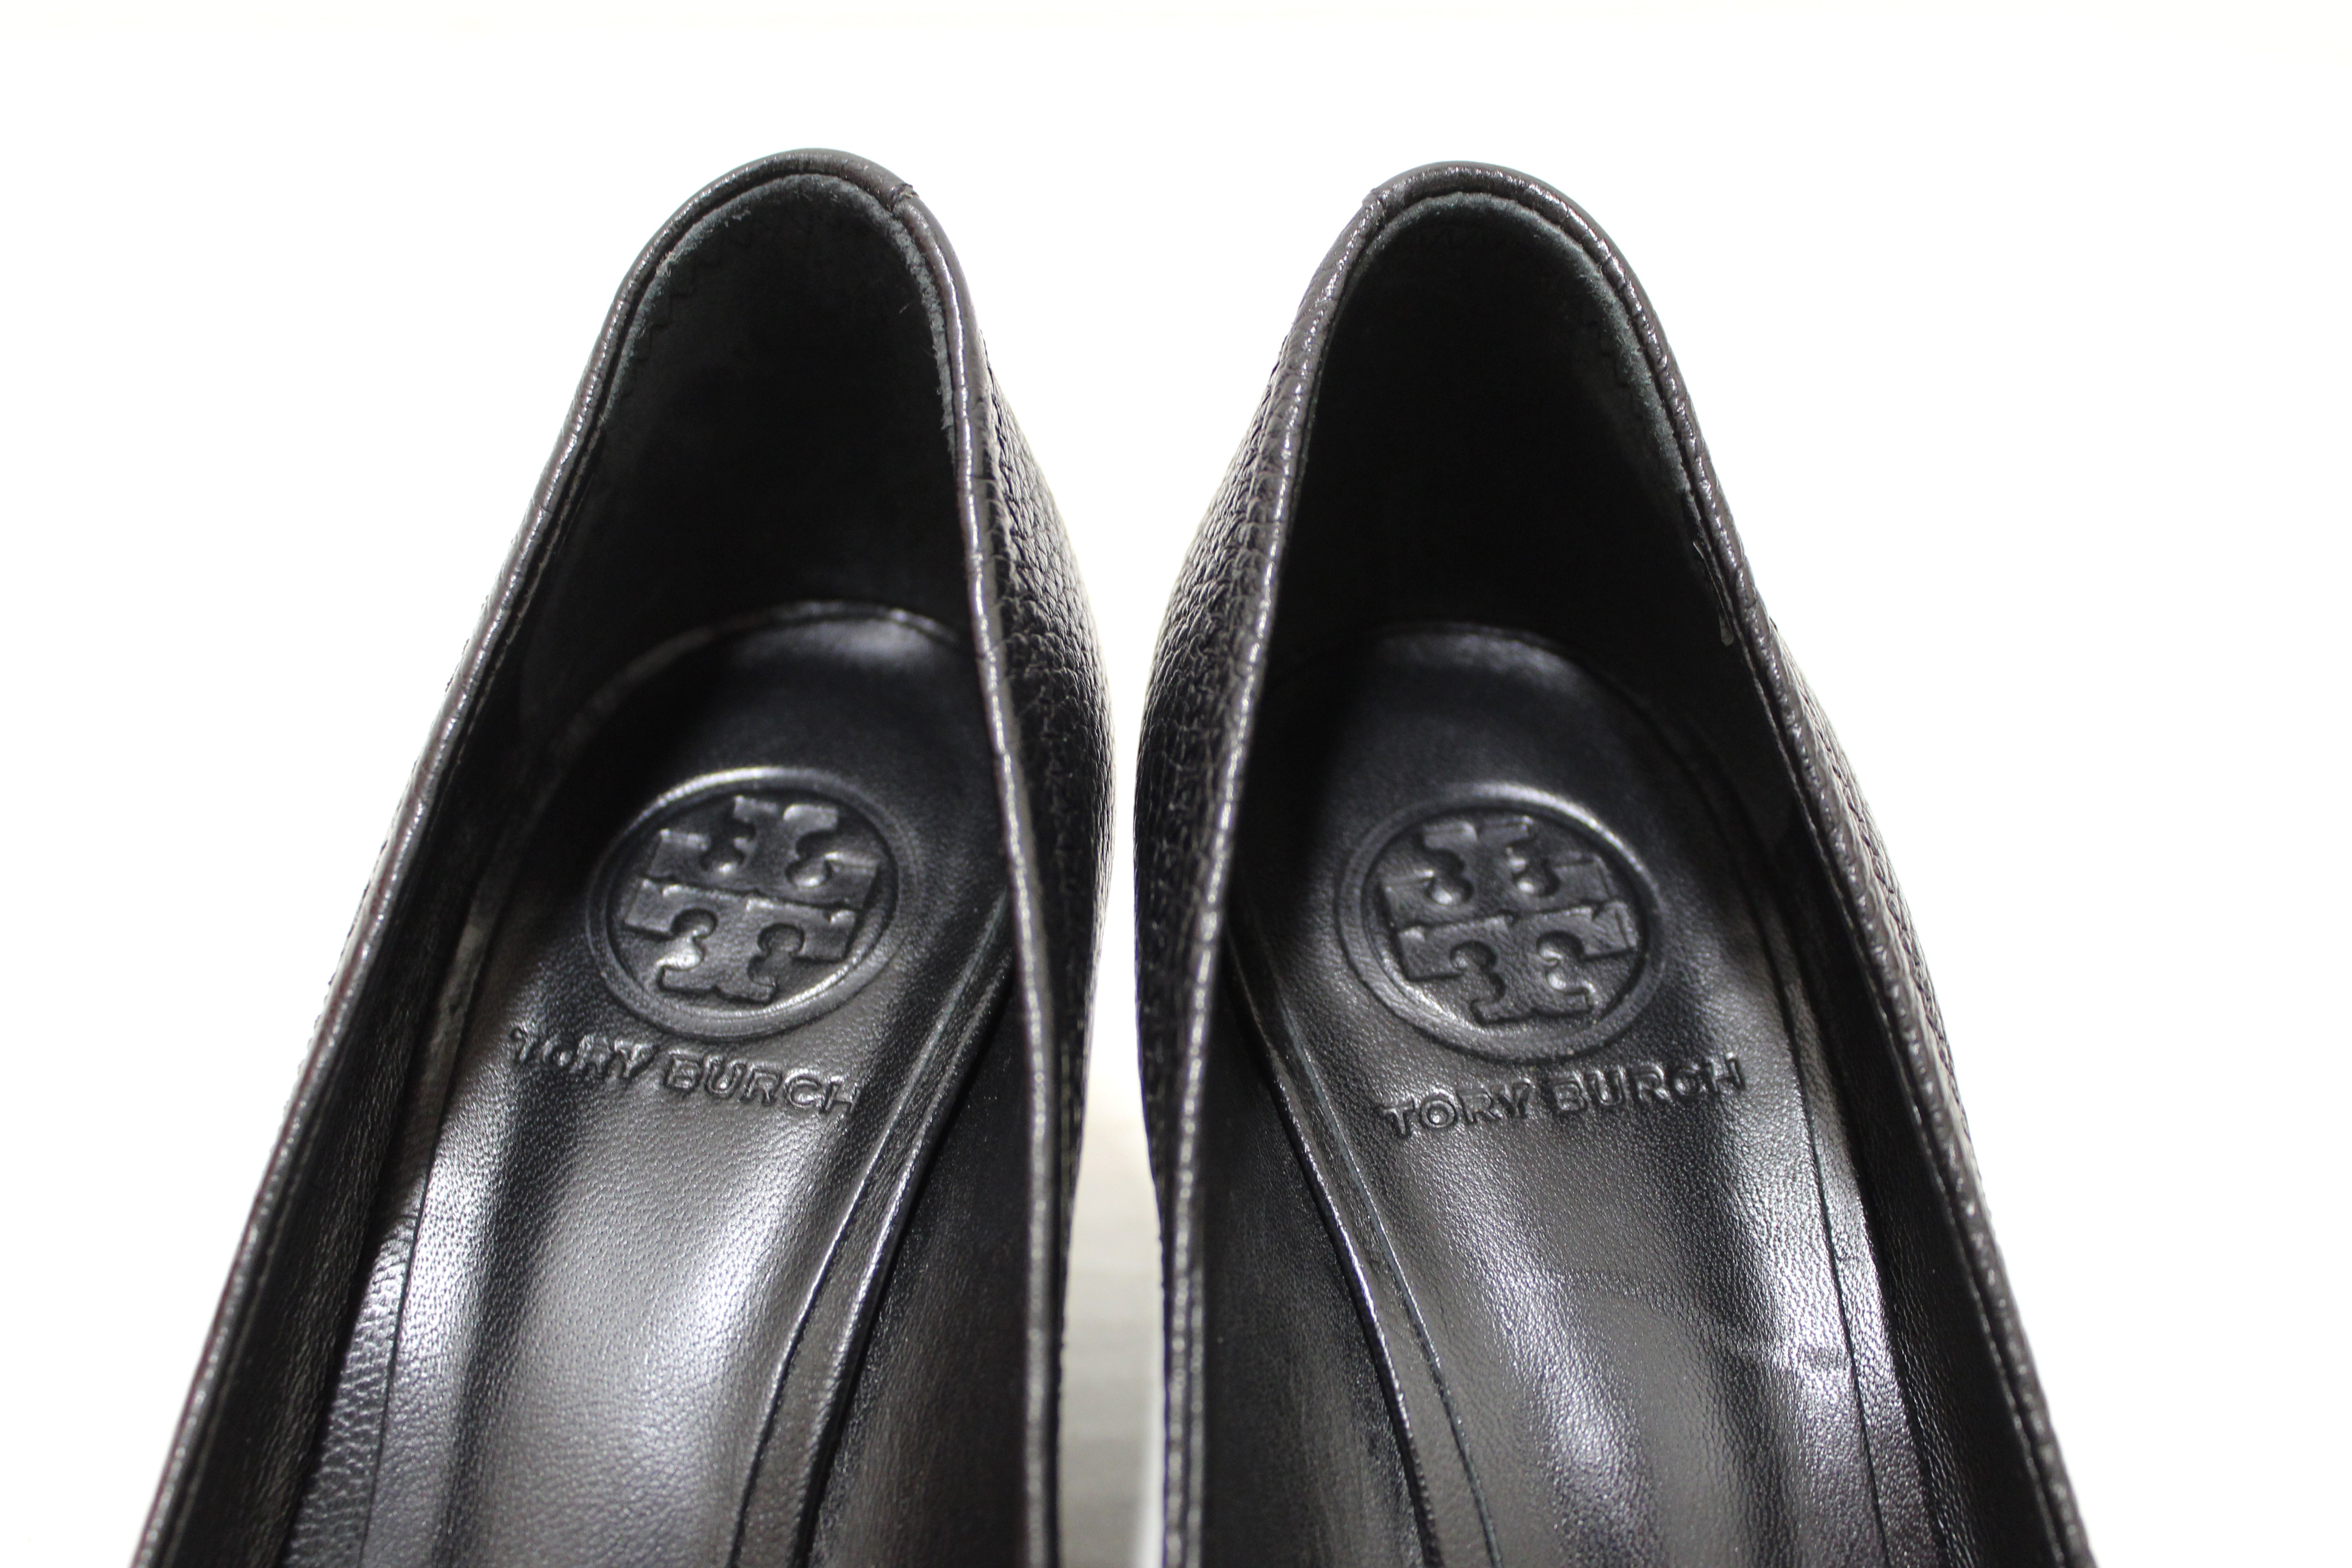 Authentic Tory Burch Sally 2 Black Leather Peep Toe Wedge Heel size 7.5